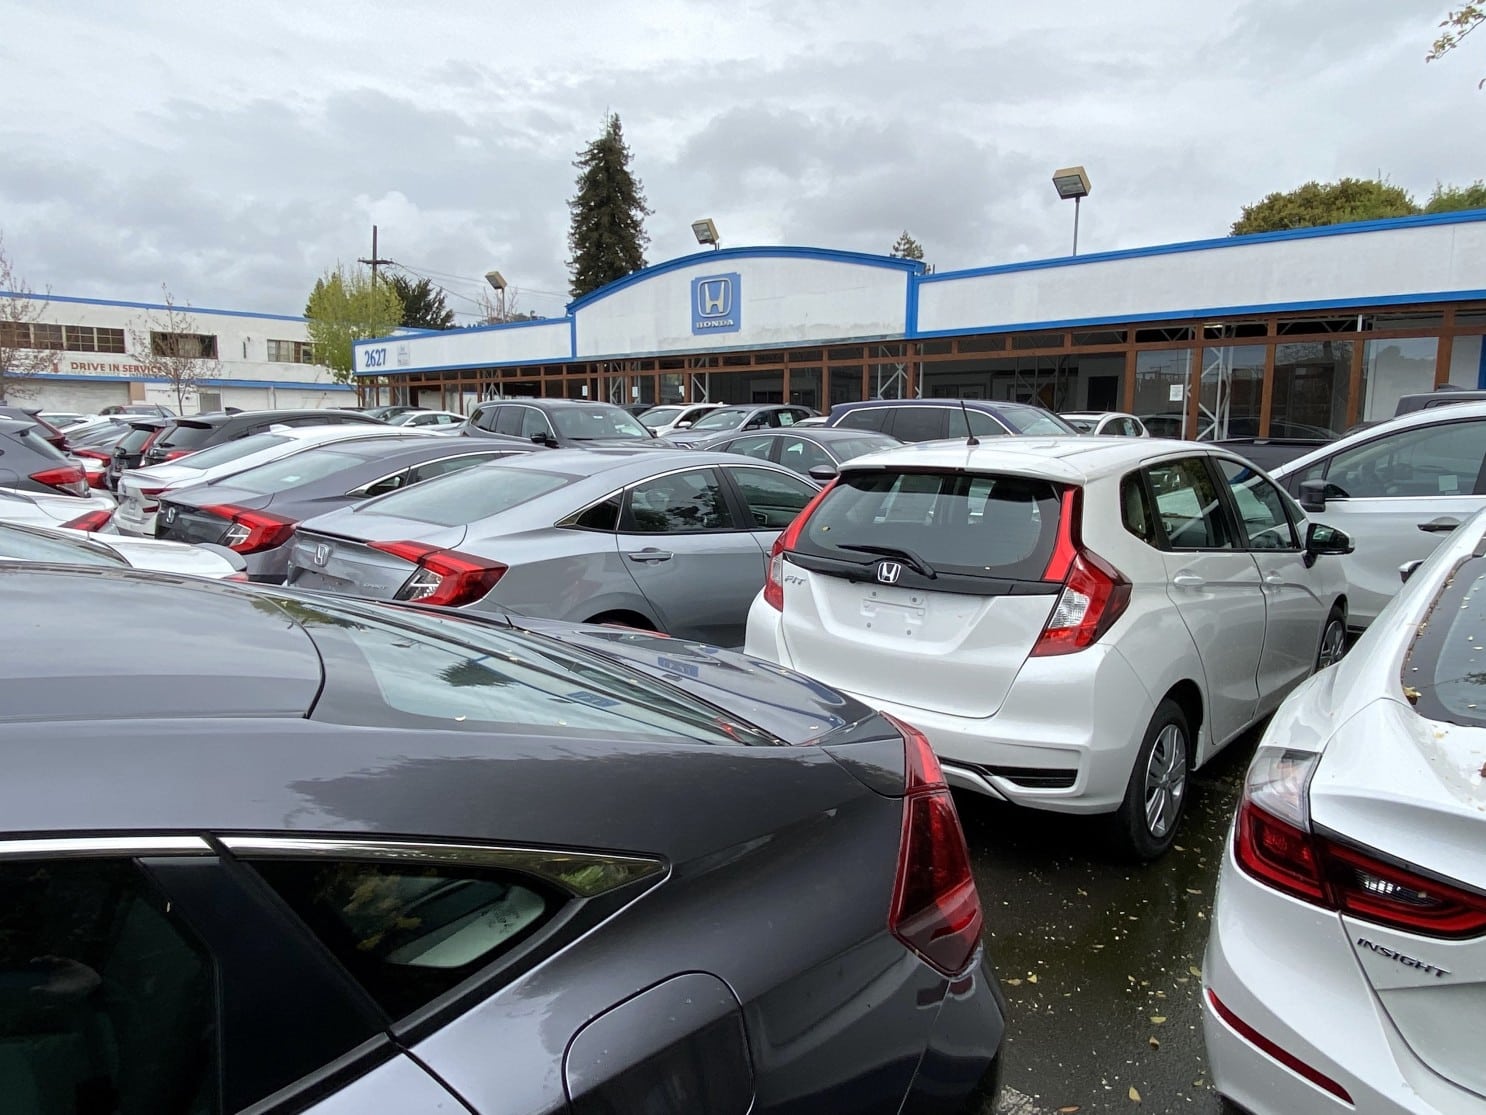 Do Car Dealerships Give Loaner Cars?